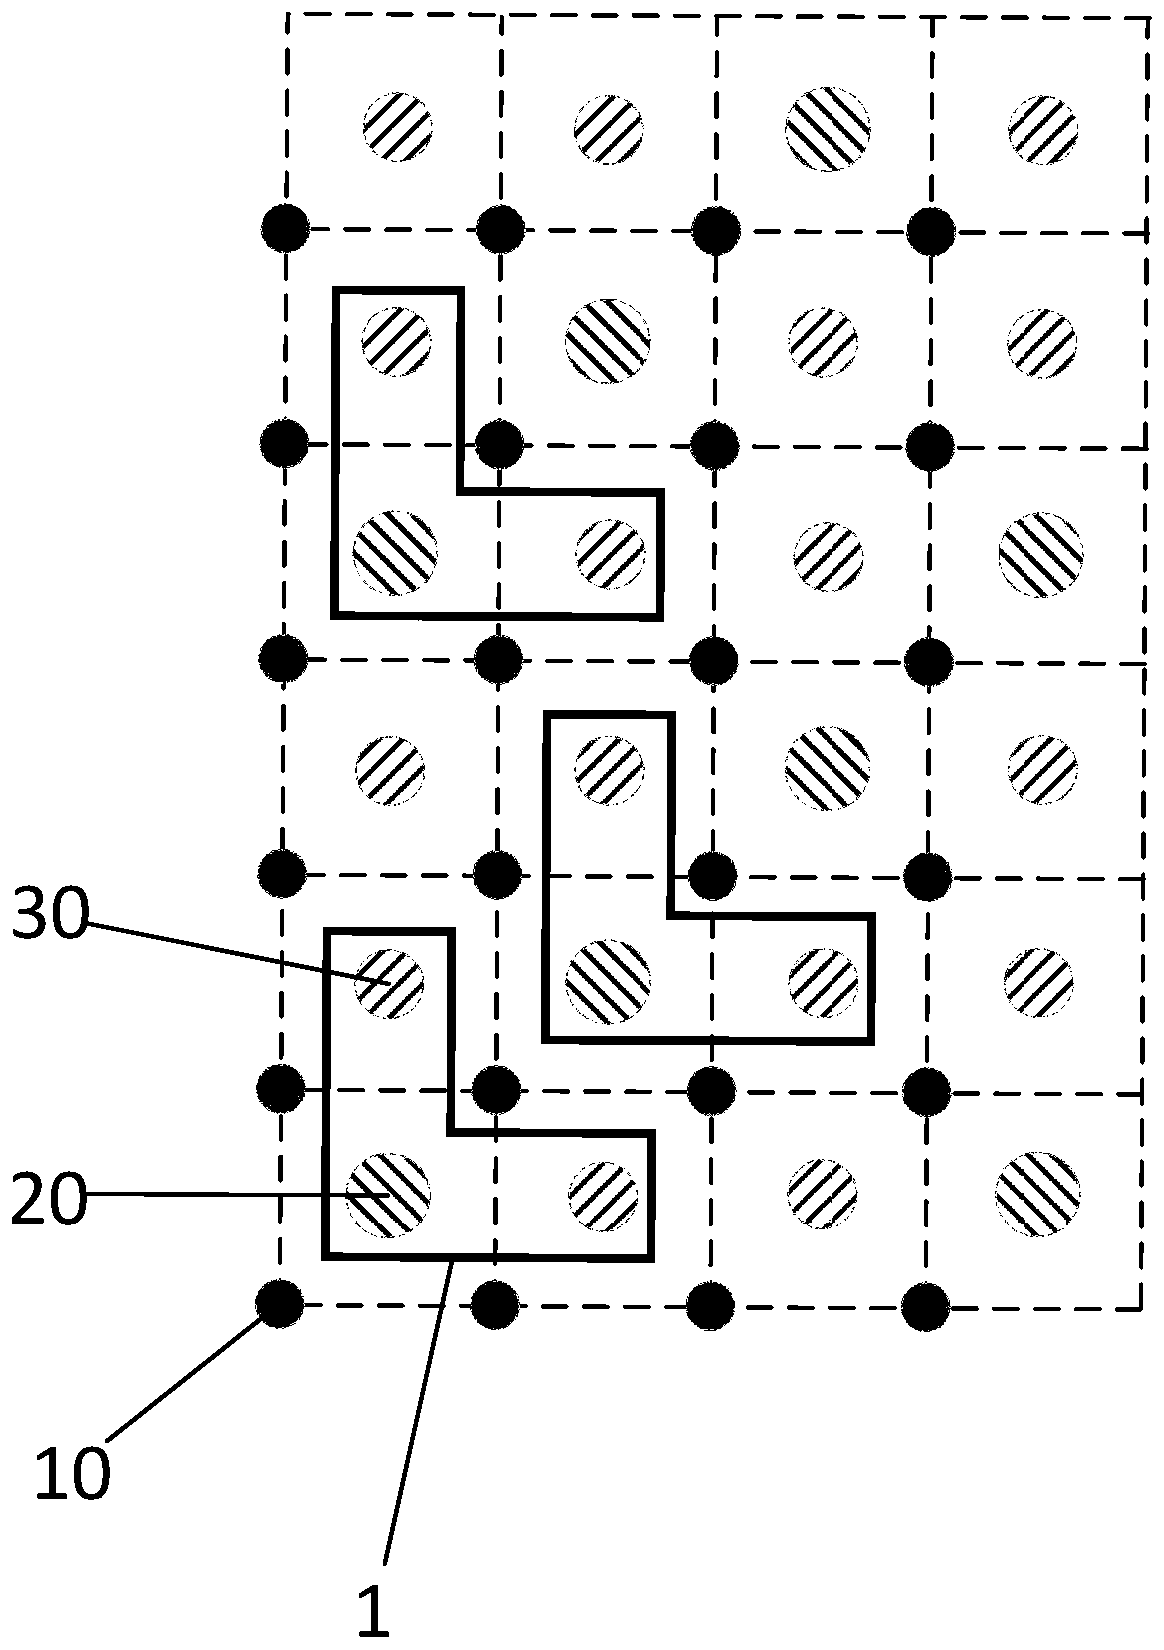 Pixel arrangement structure and rendering method thereof